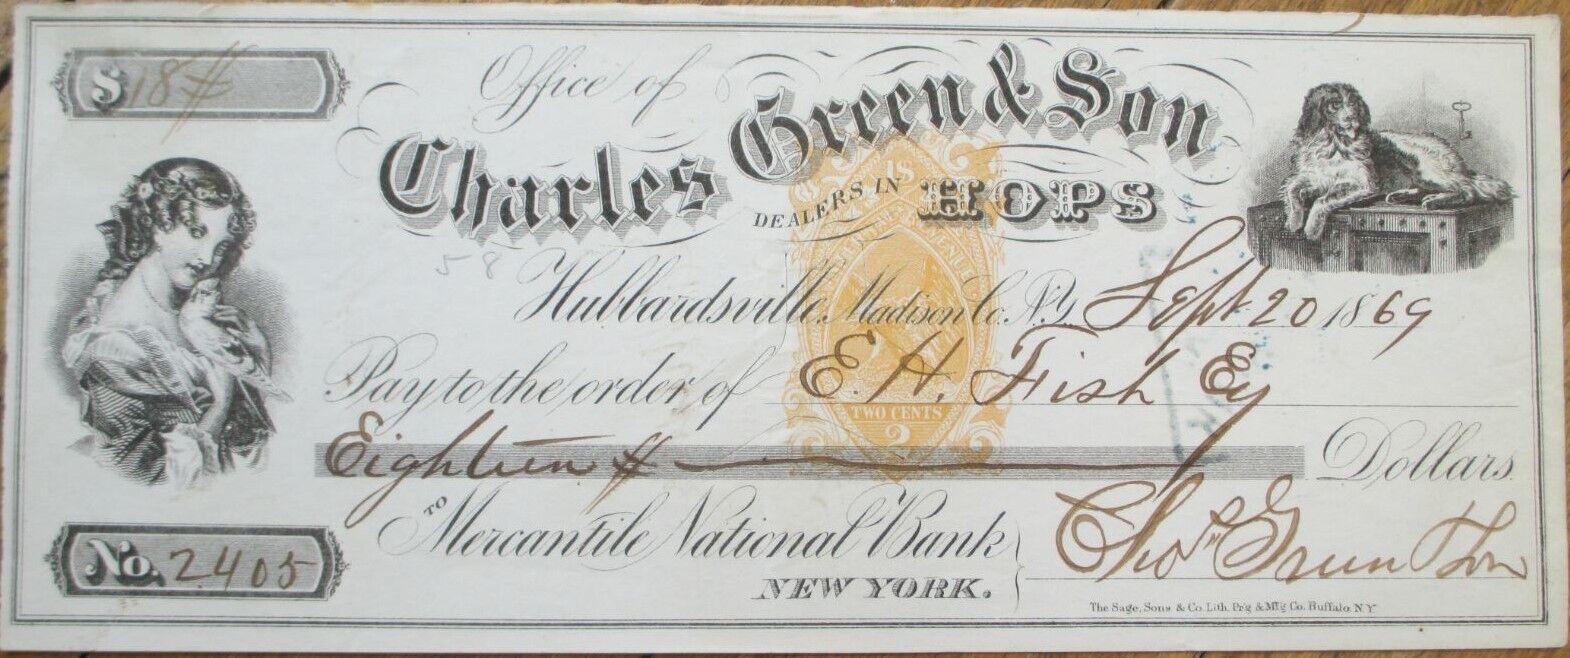 Hubbardsville, NY 1869 Bank Check, Charles Green Hops Dealer, Imprinted Revenue